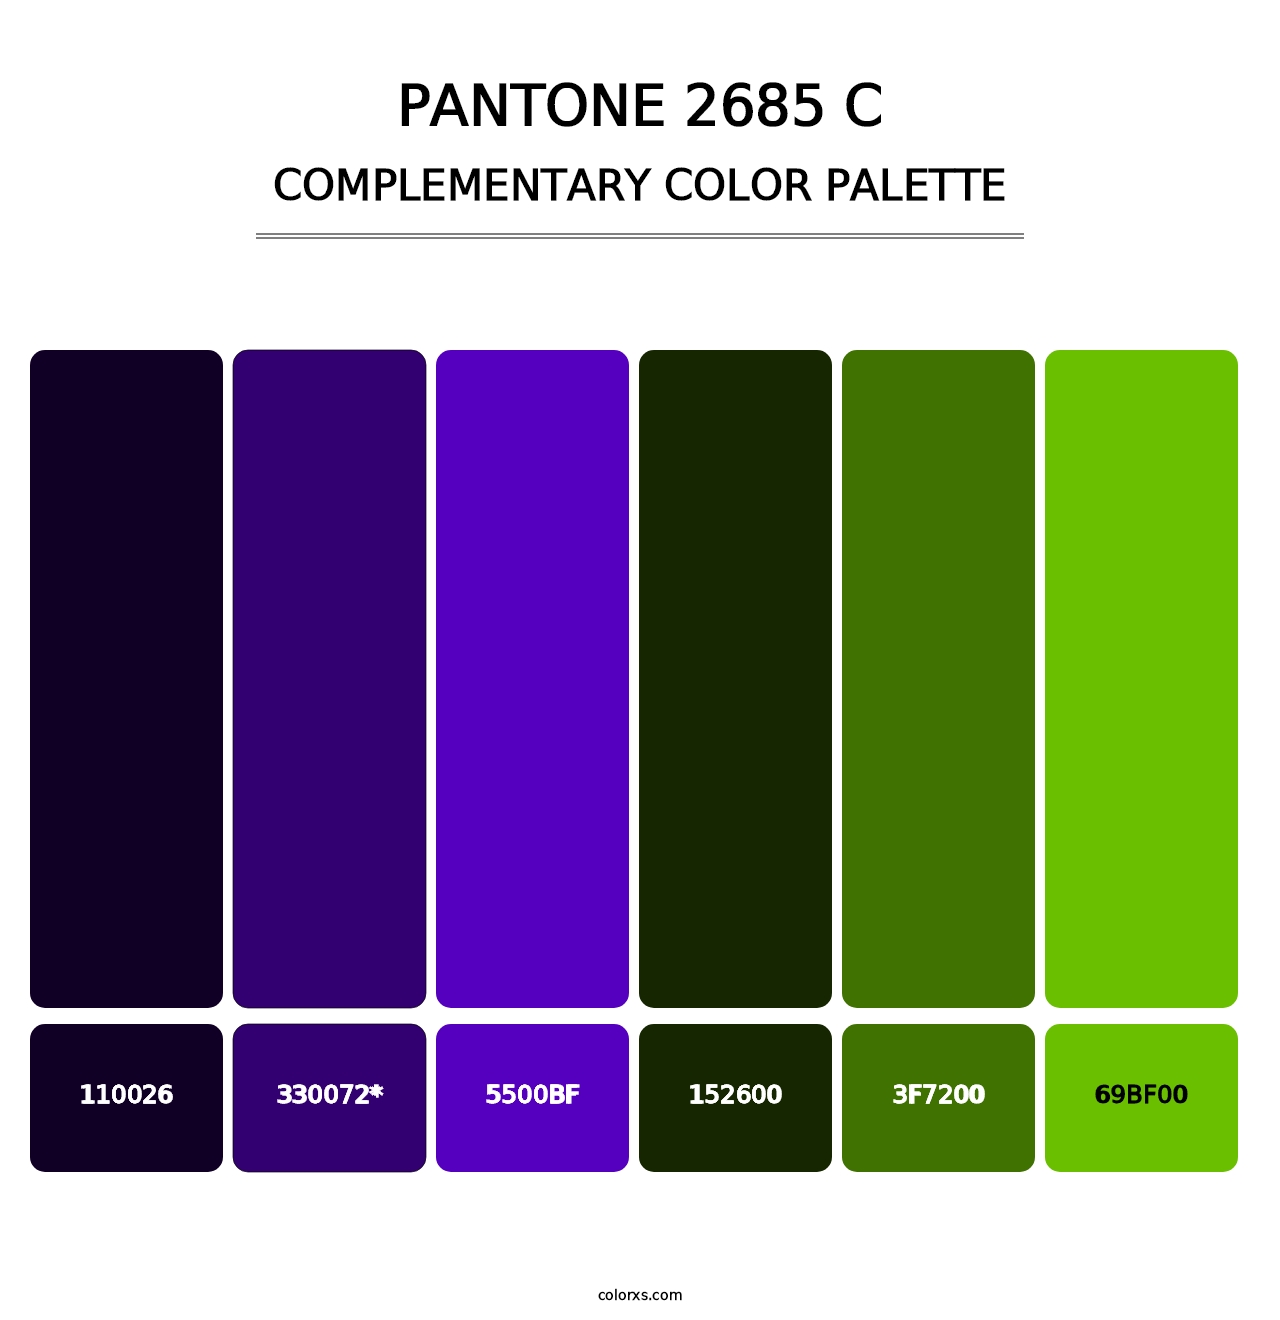 PANTONE 2685 C - Complementary Color Palette